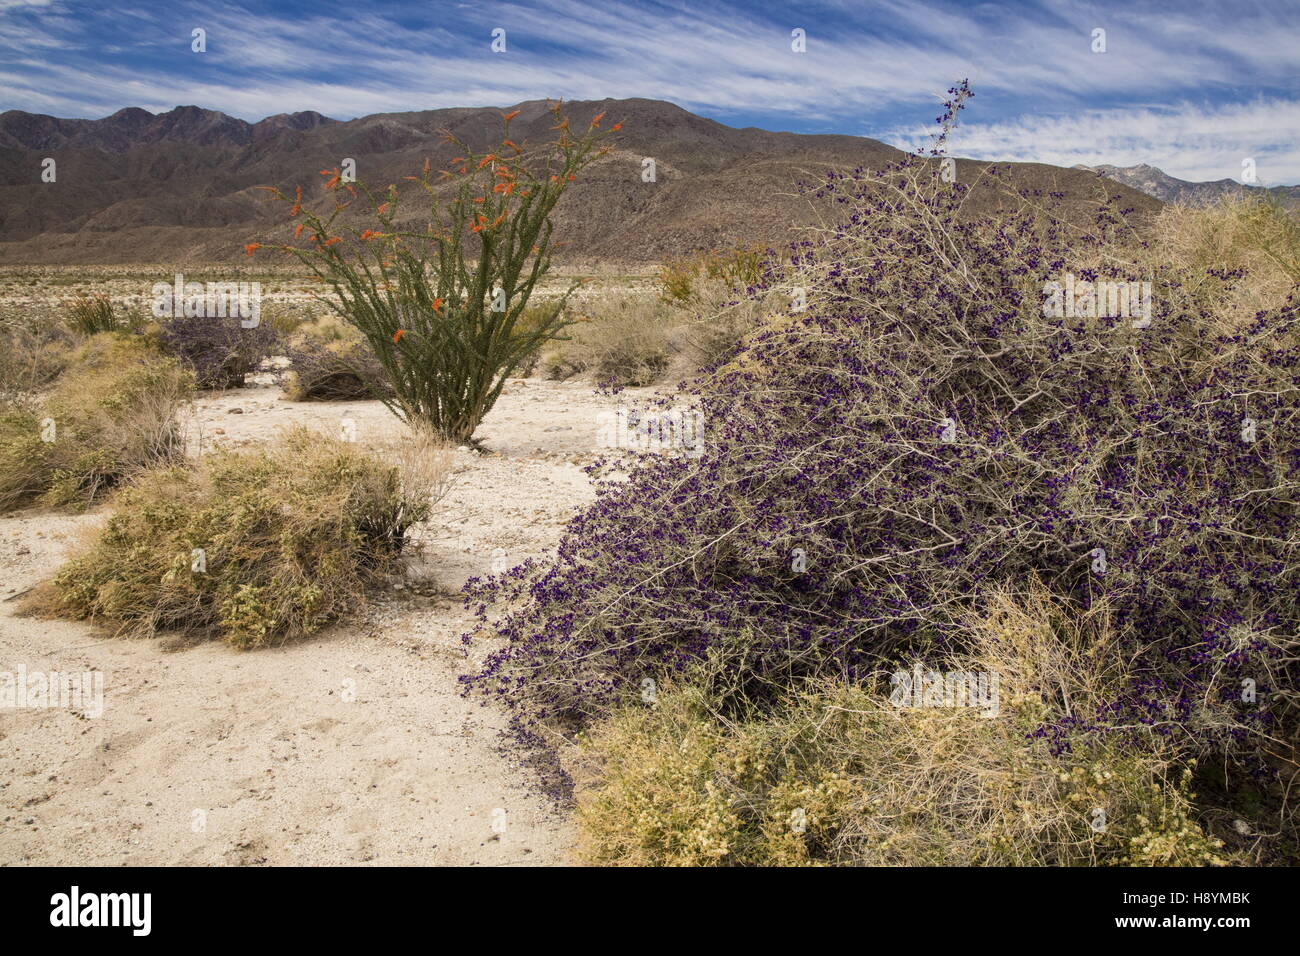 The Californian Desert in flower, with Ocotillo, Indigo Bush, Creosote bush etc in Coyote Canyon, Anza-Borrego Desert State Park Stock Photo